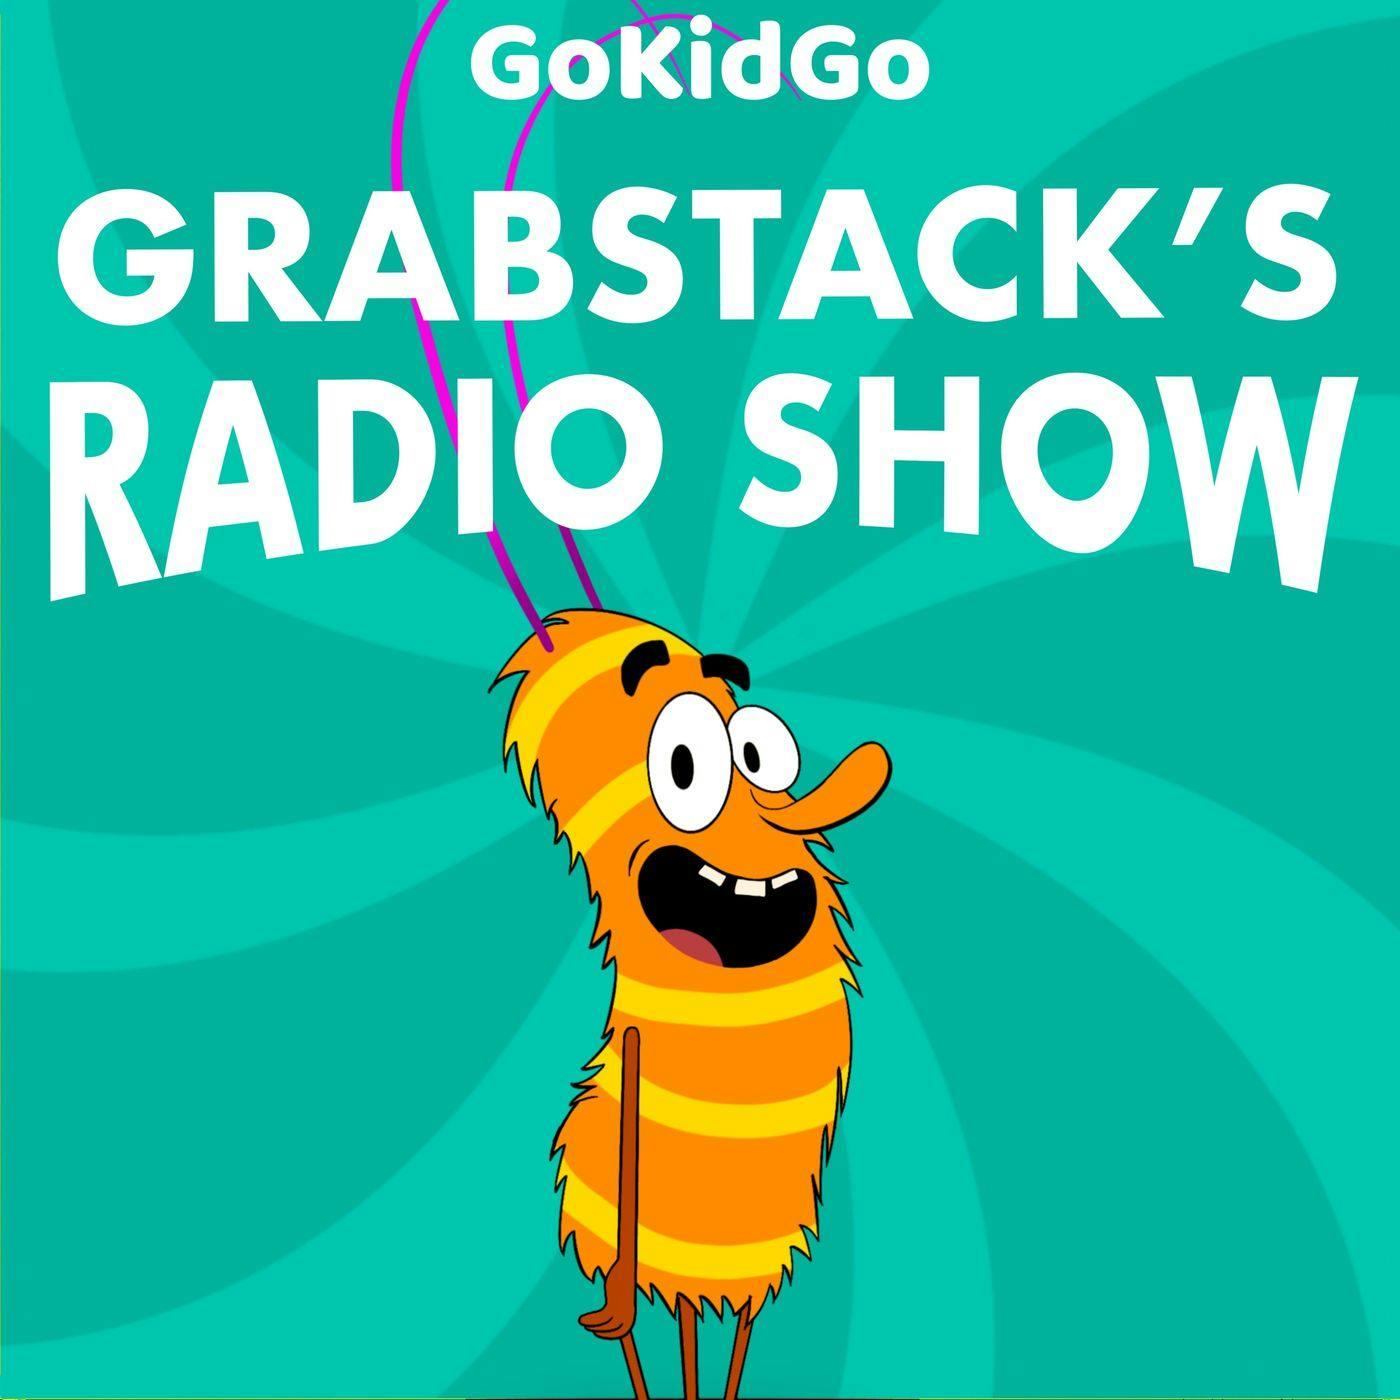 S1E15 - Grabstack Radio Show: Riddle Fest